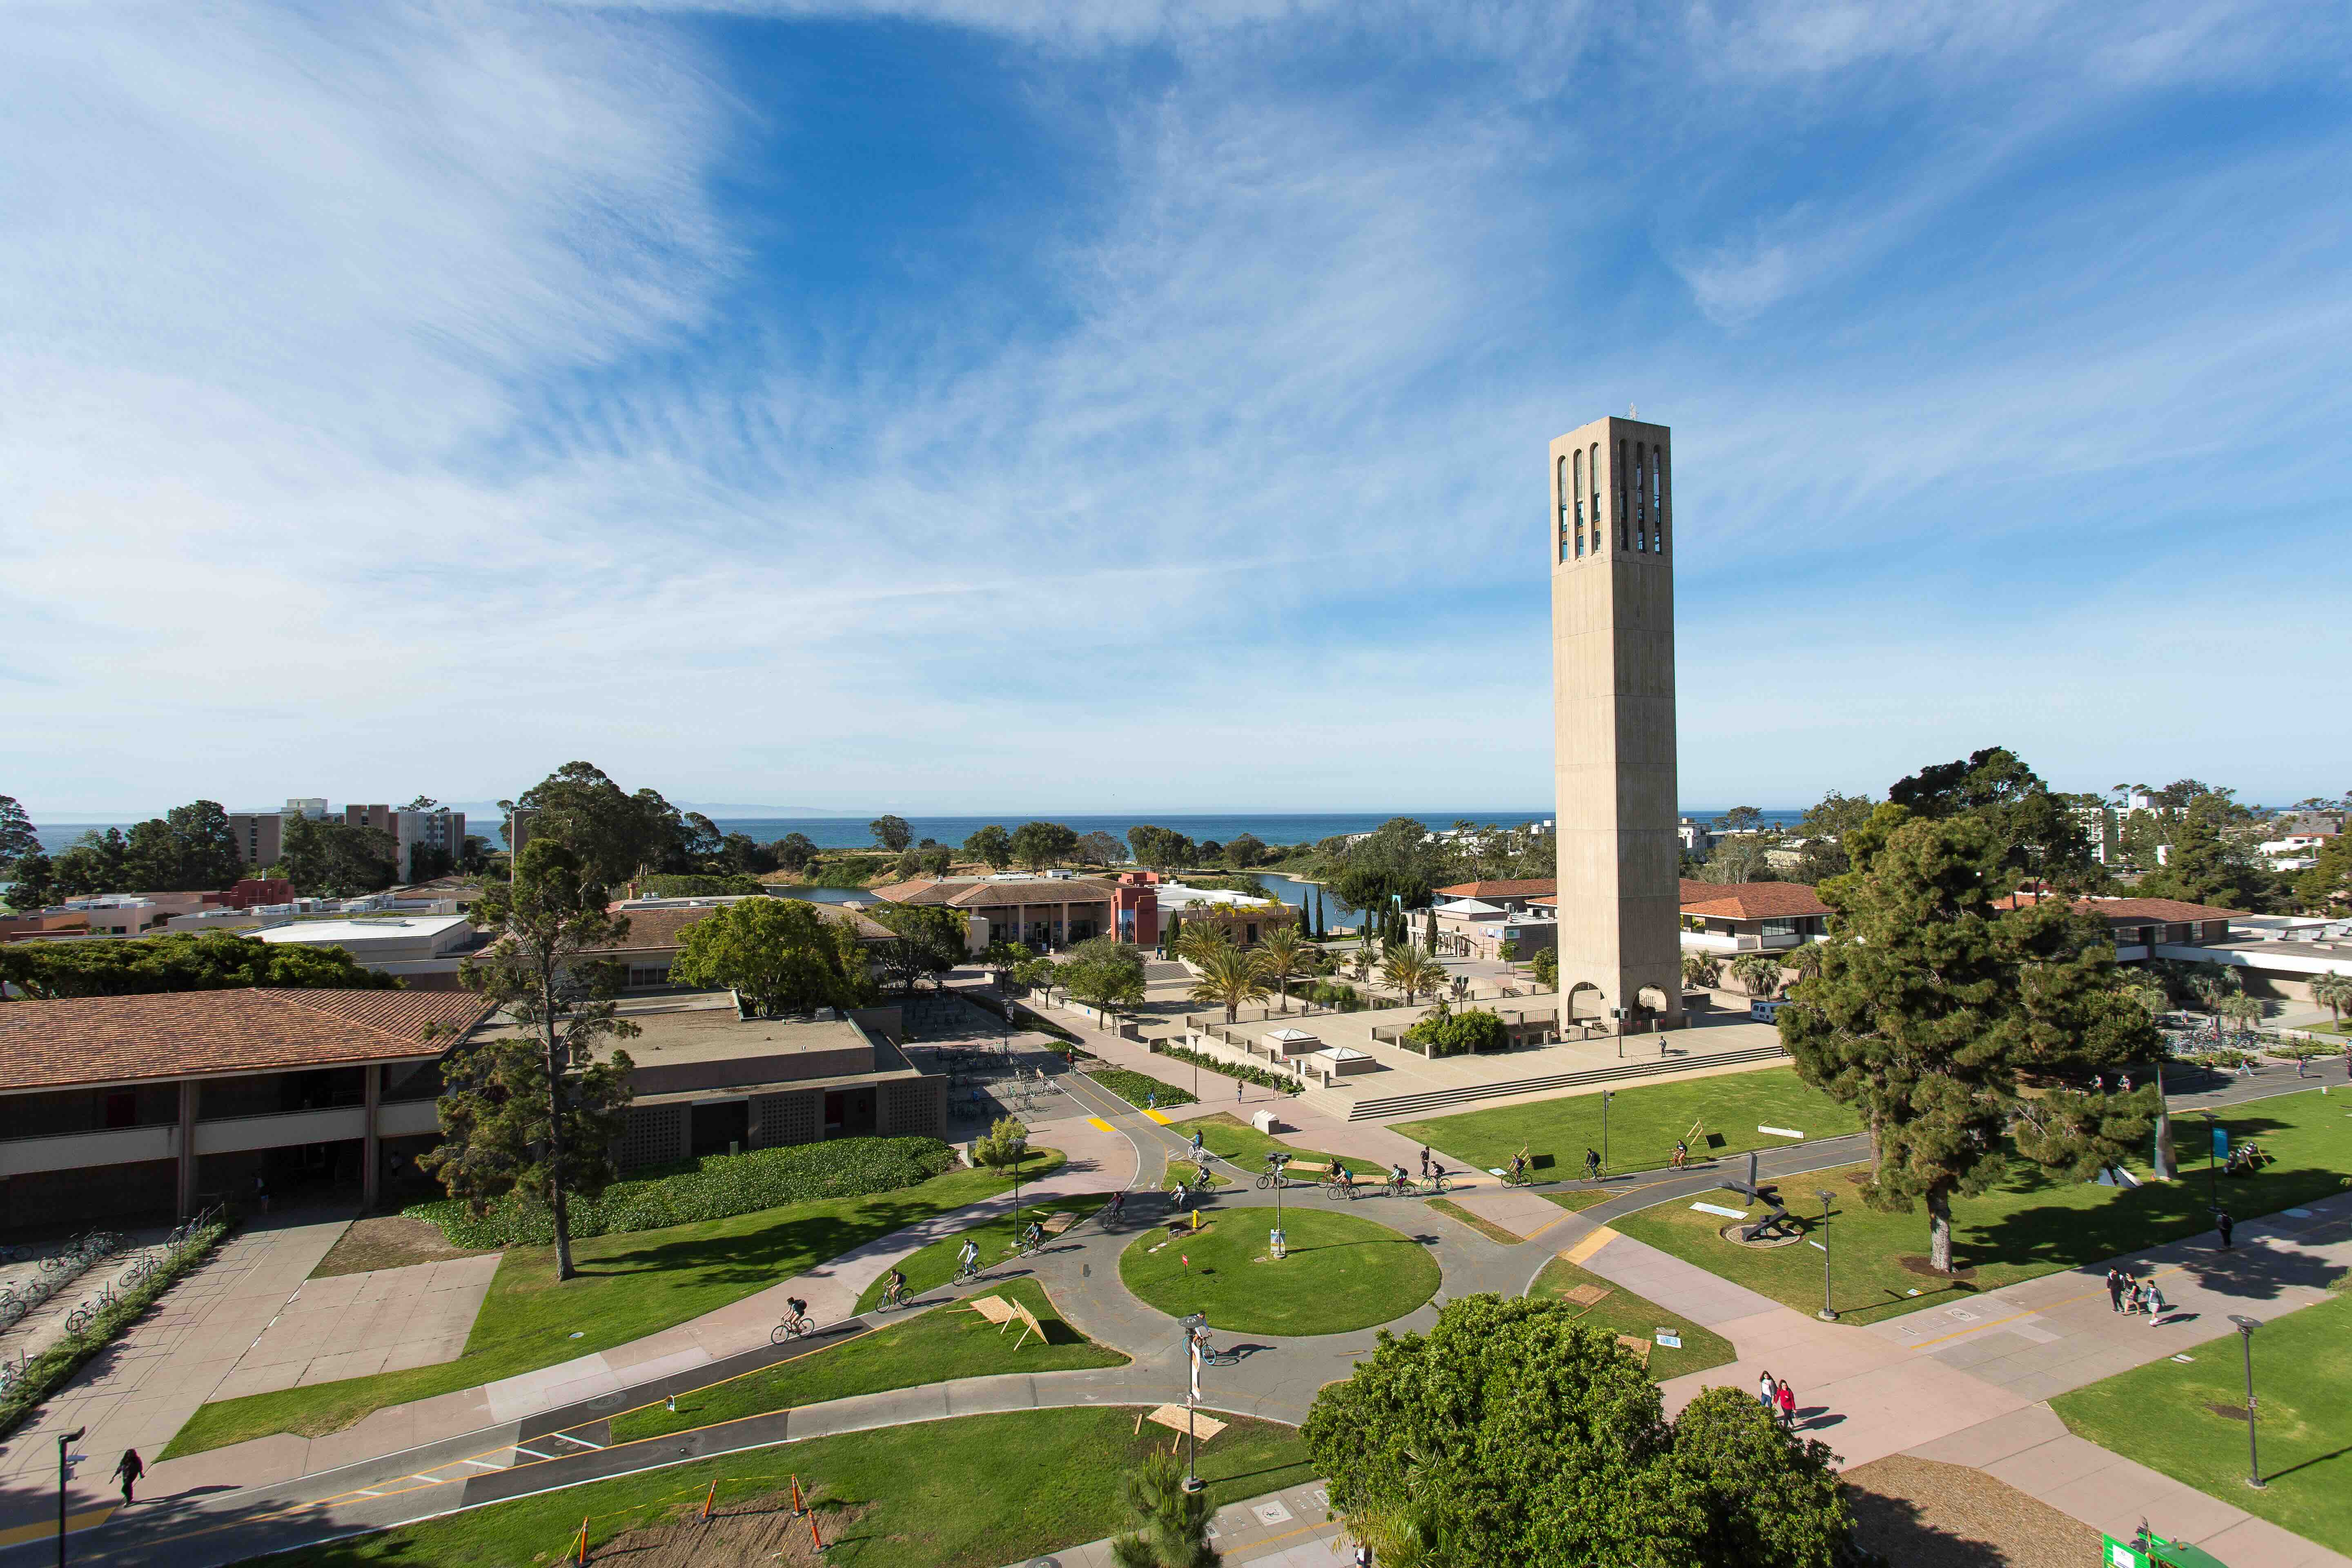 Storke Tower Asset ID82755231 
Copyright: University of California Santa Barbara